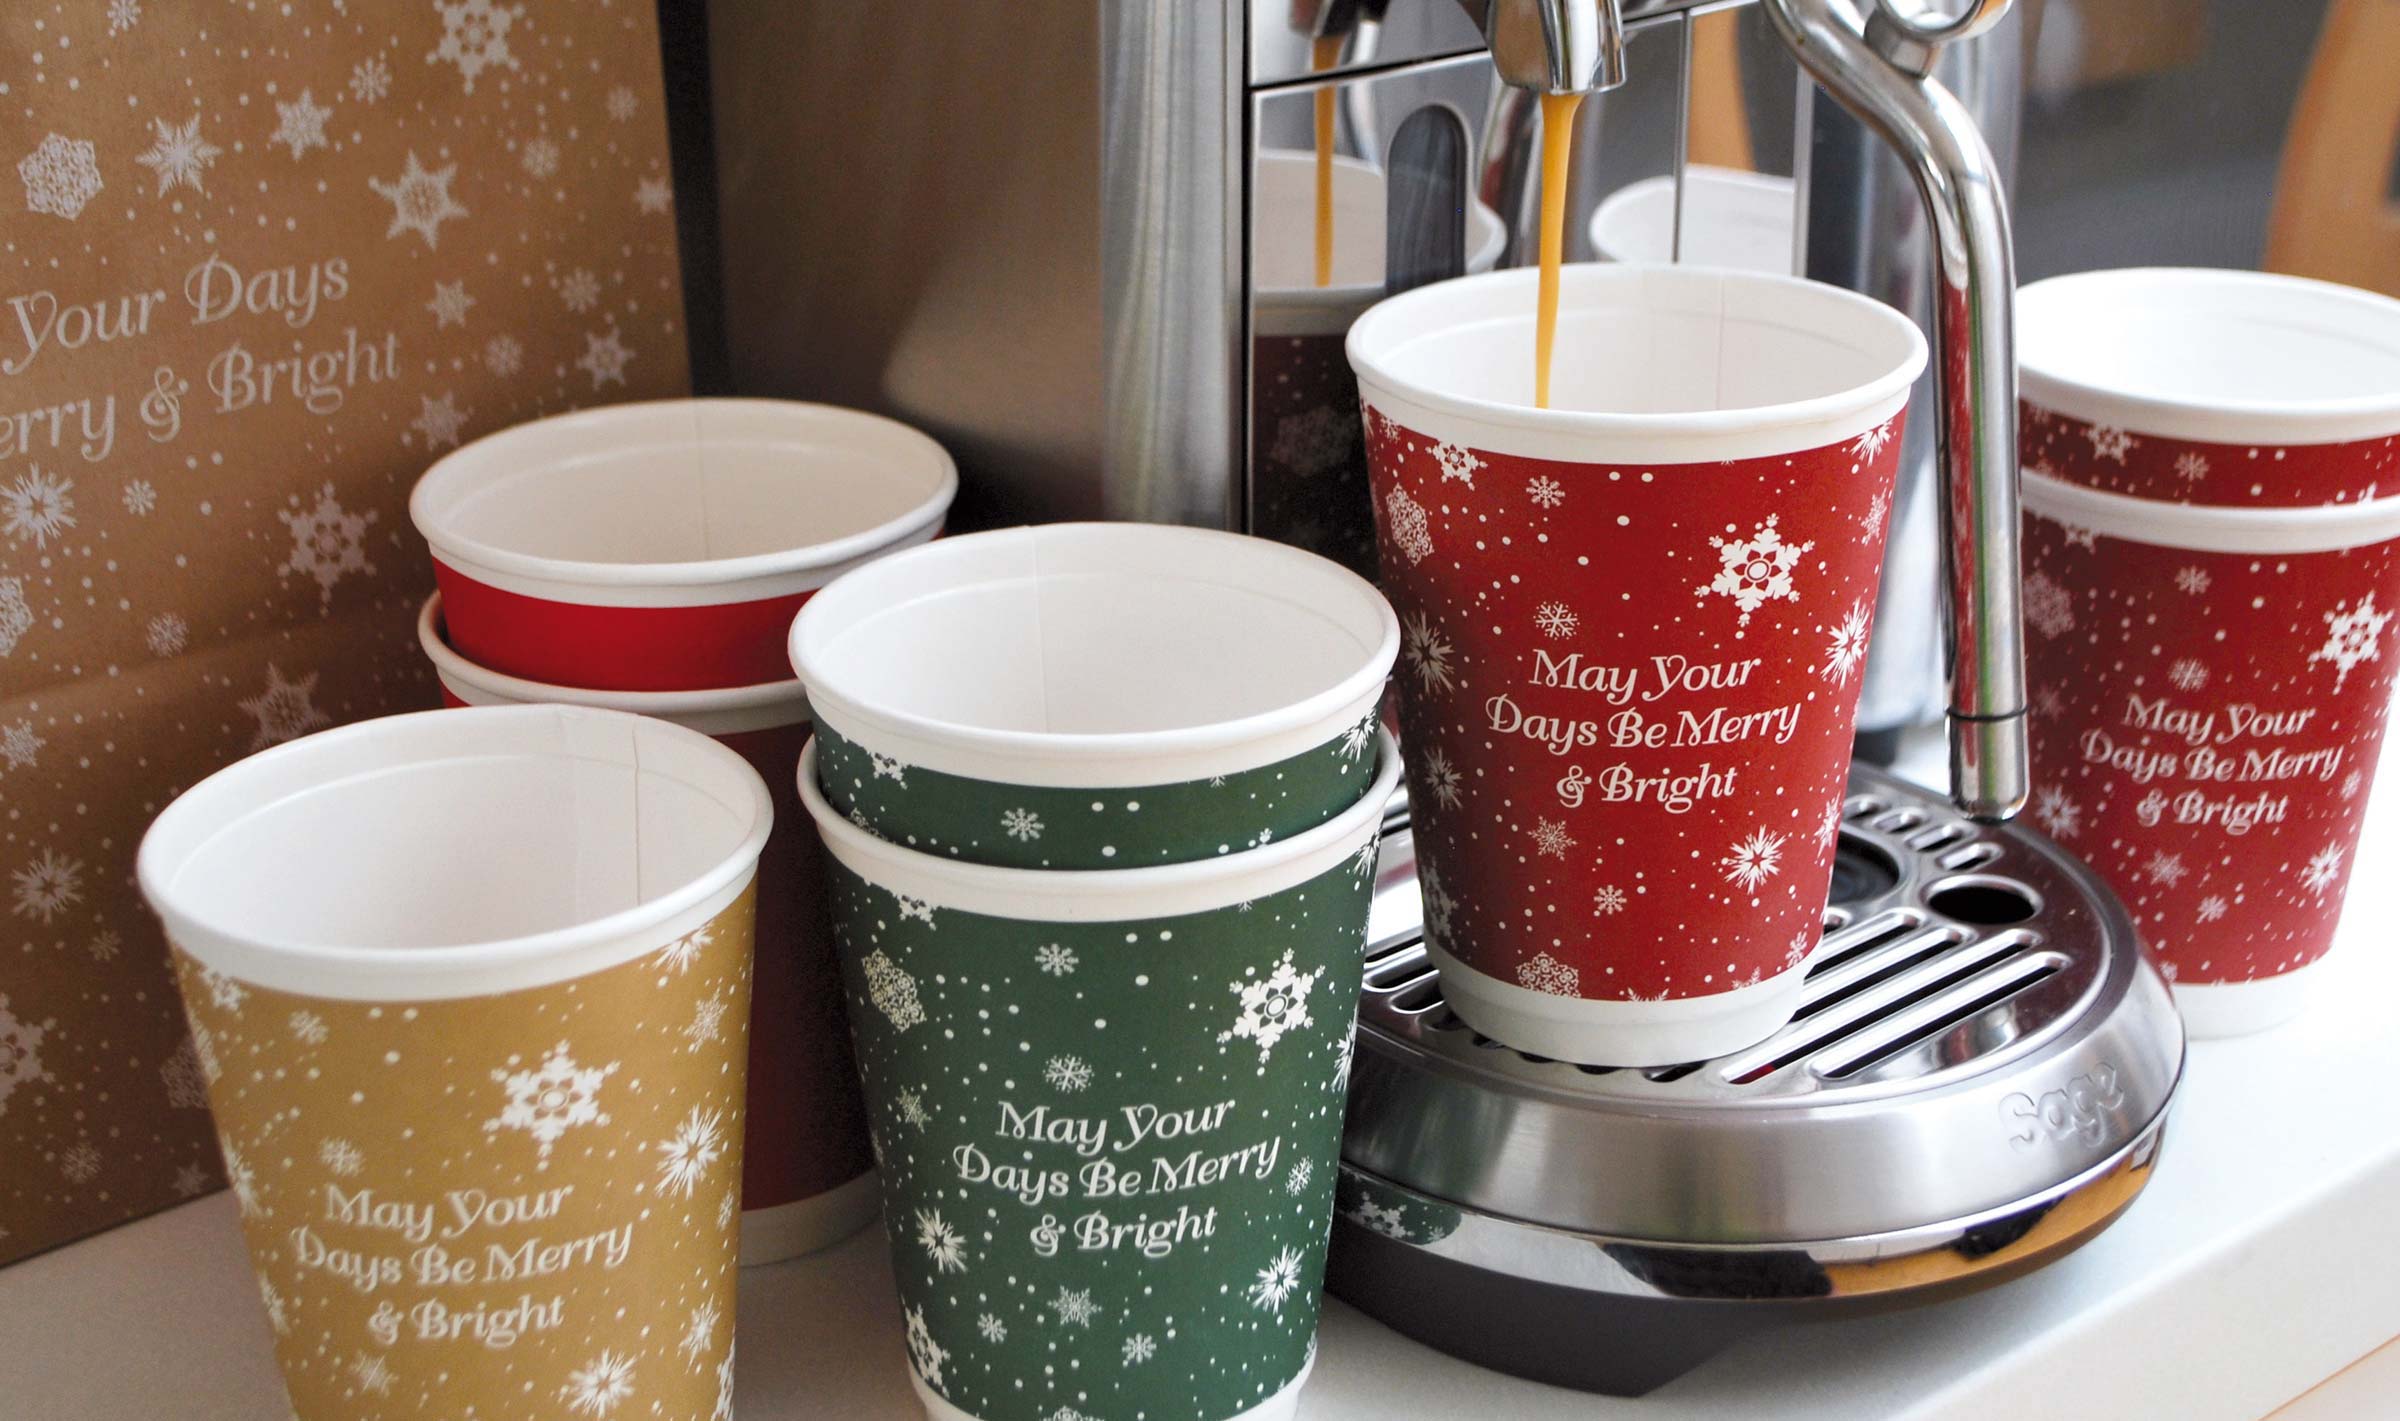 Café Connections Christmas cups